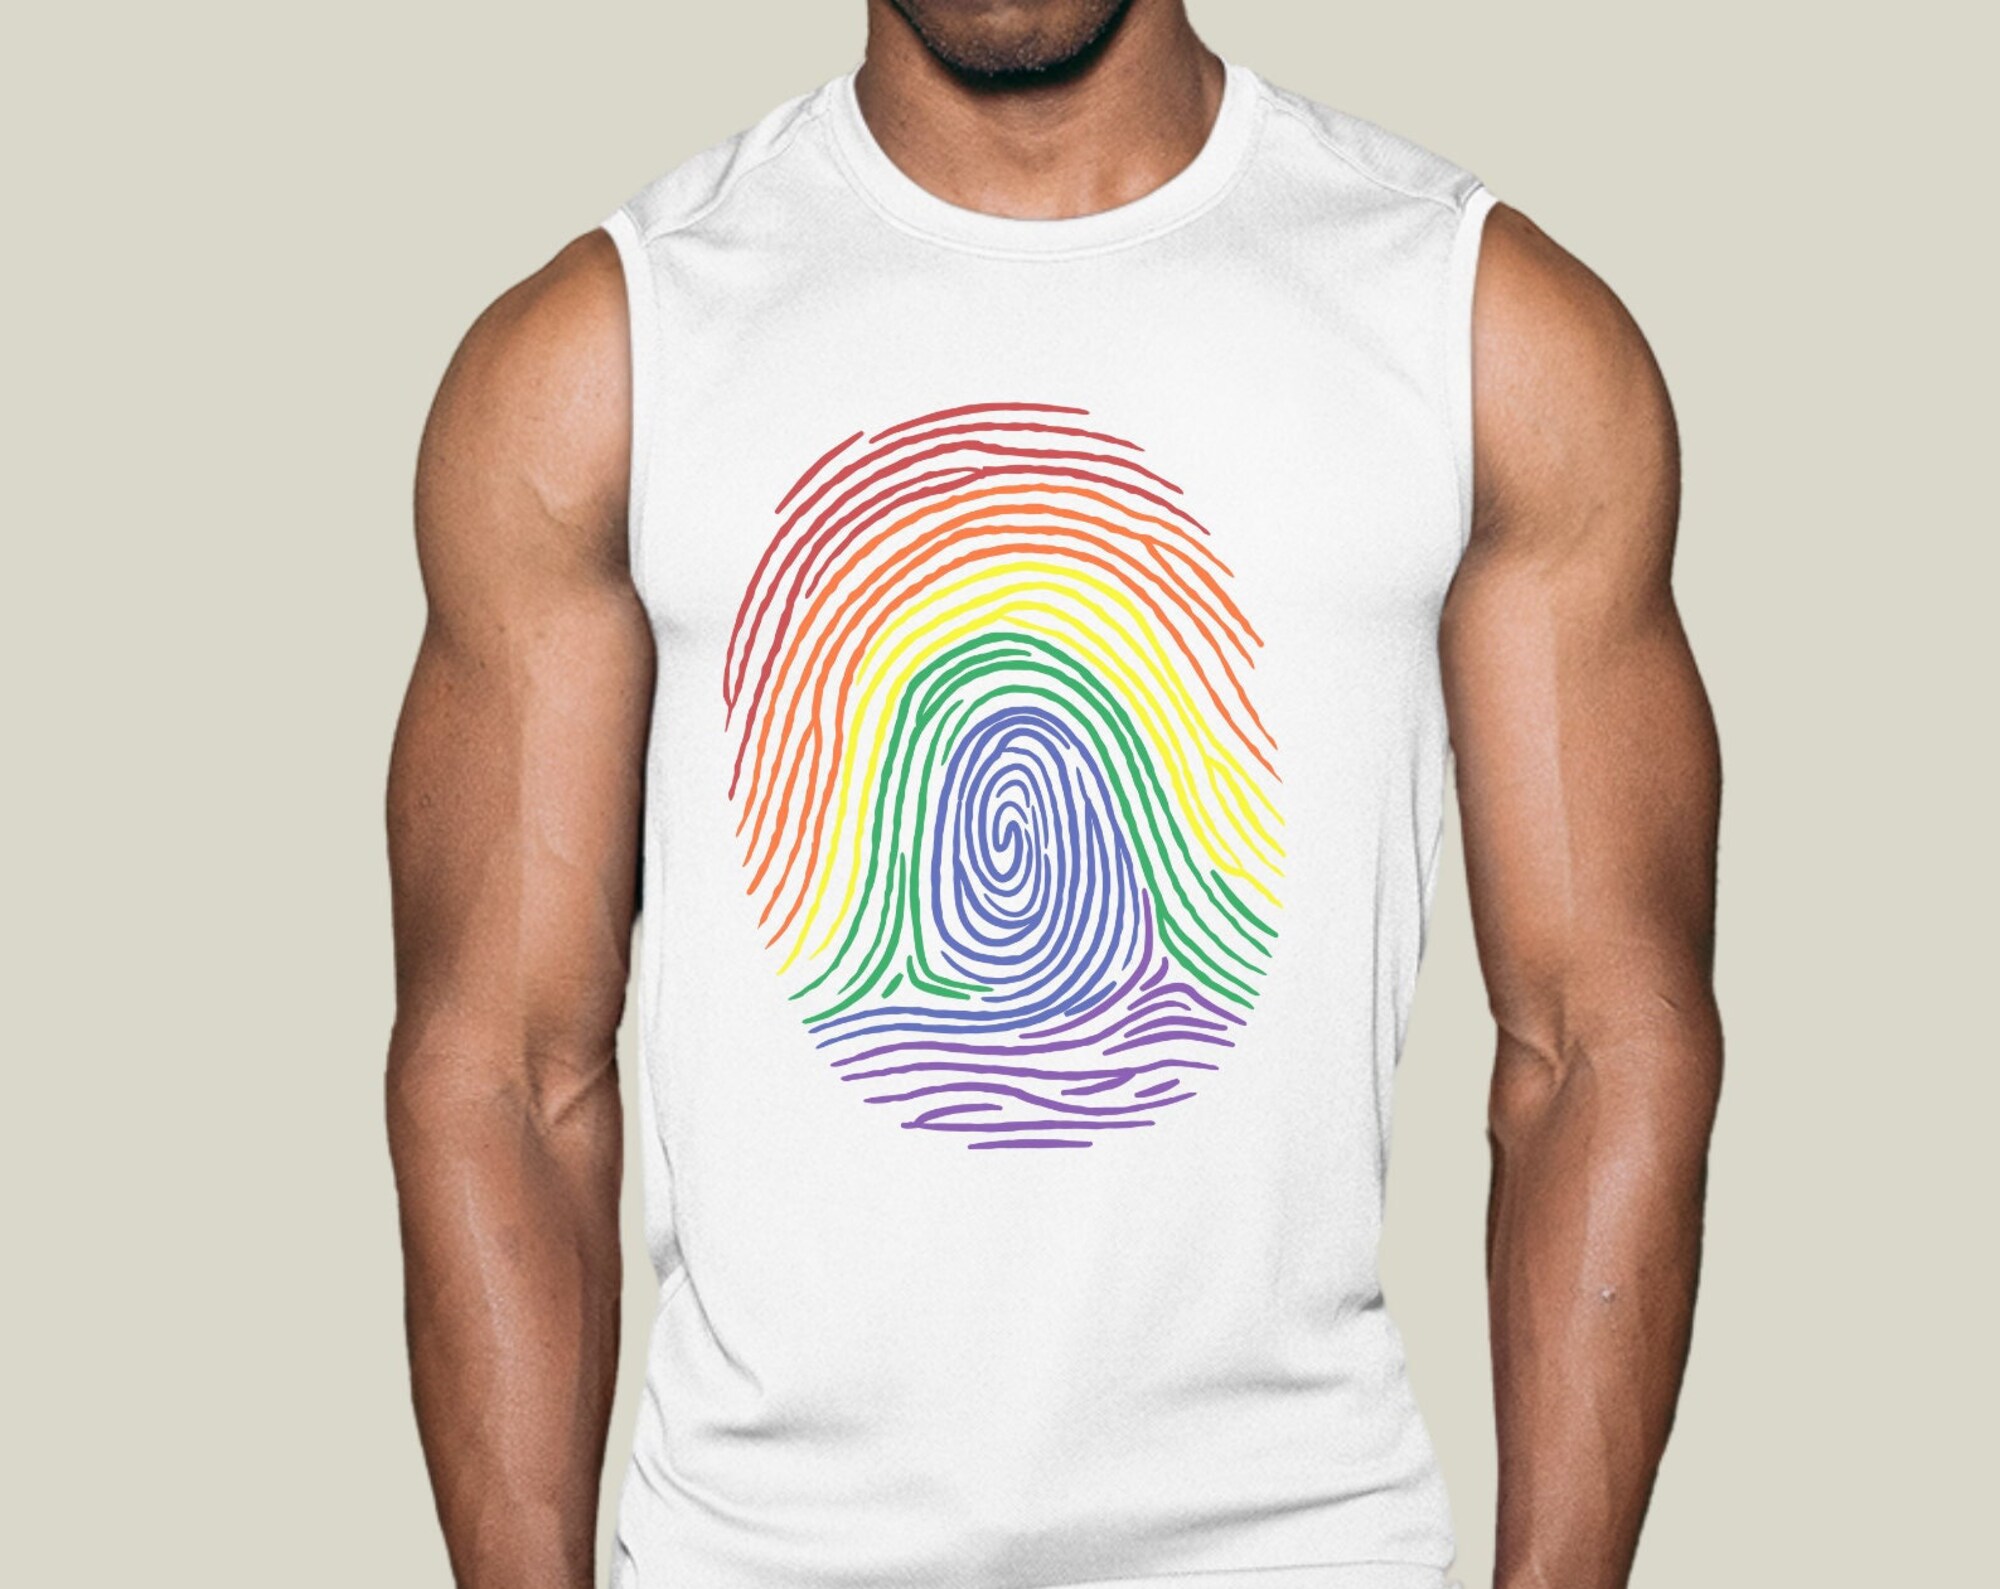 Pride Muscle Top, Digital Print Shirt, Pride Tank Top